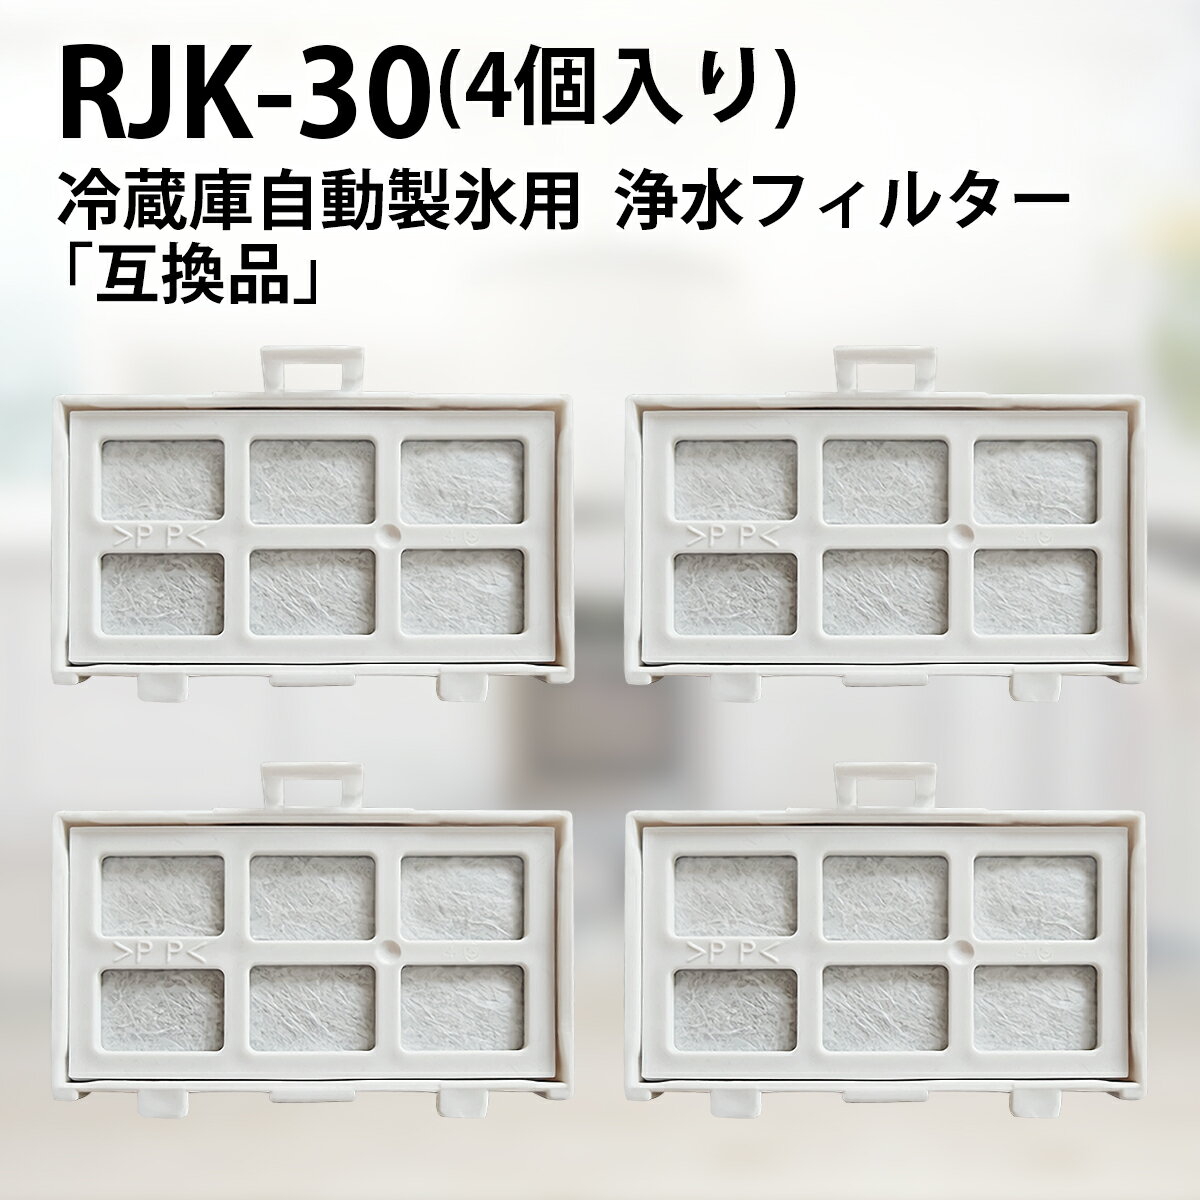 rjk-30 冷蔵庫 製氷機フィルター 浄水